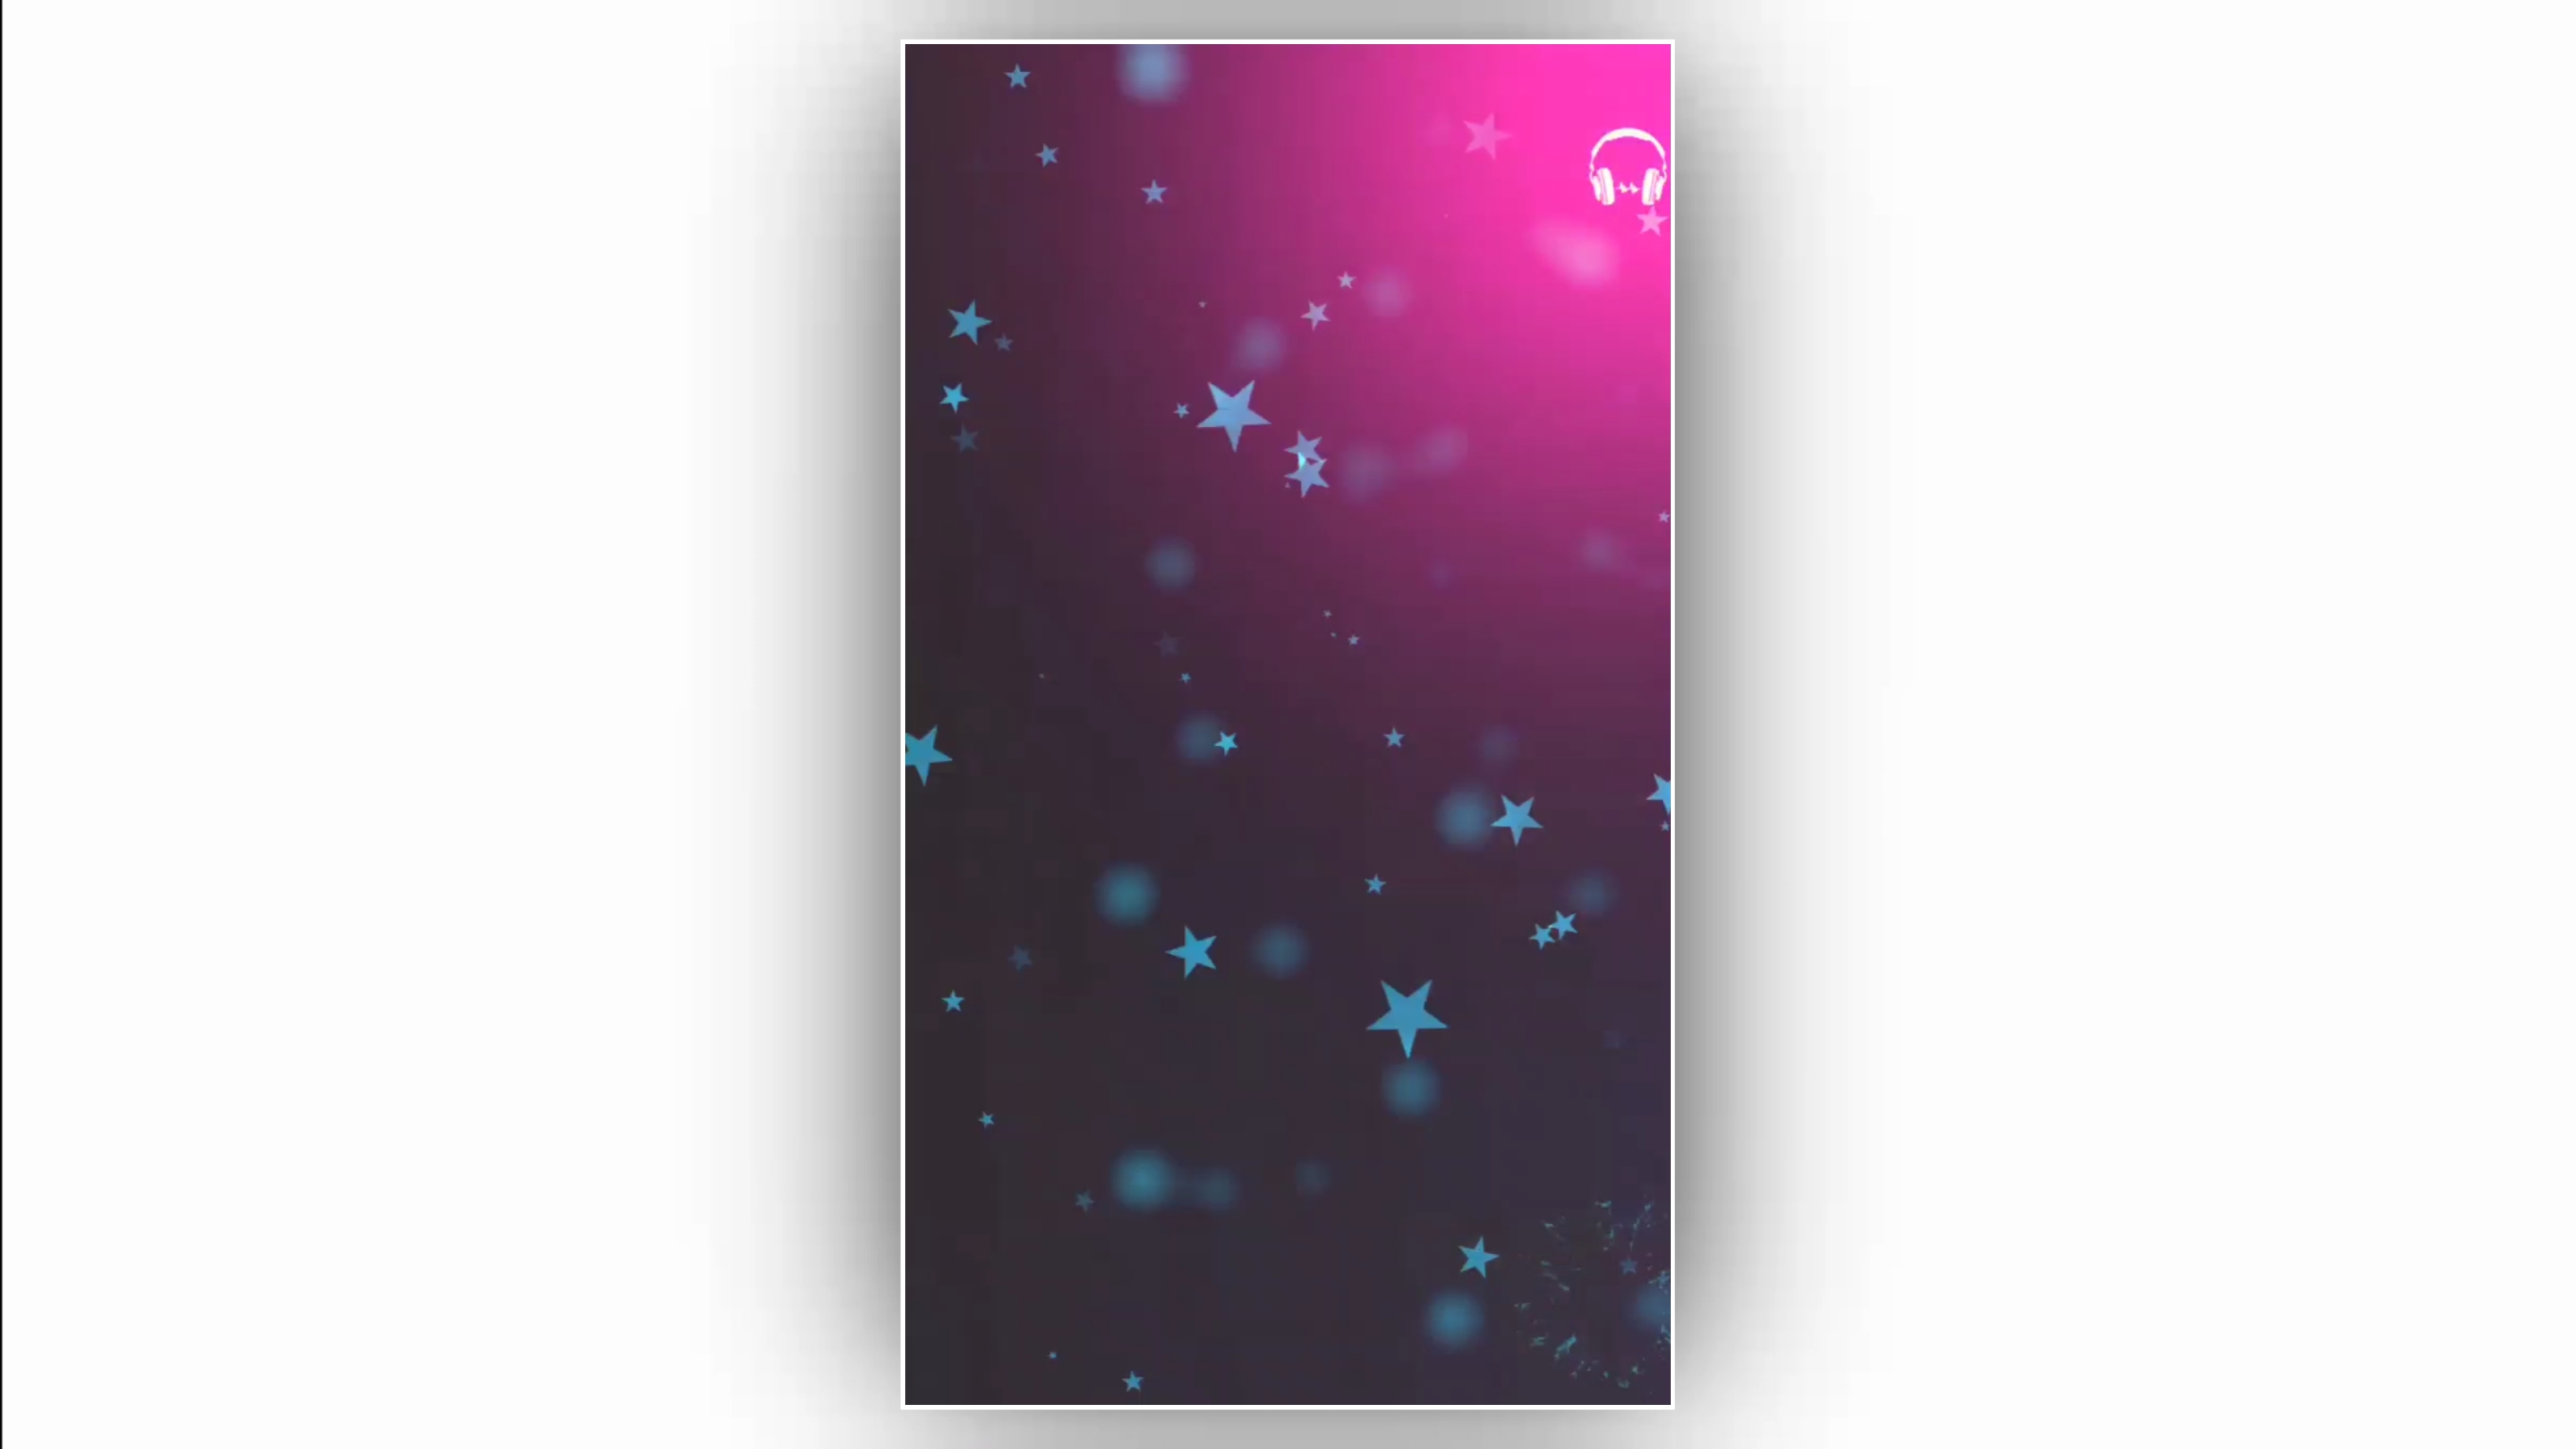 Star light background video effect black screen